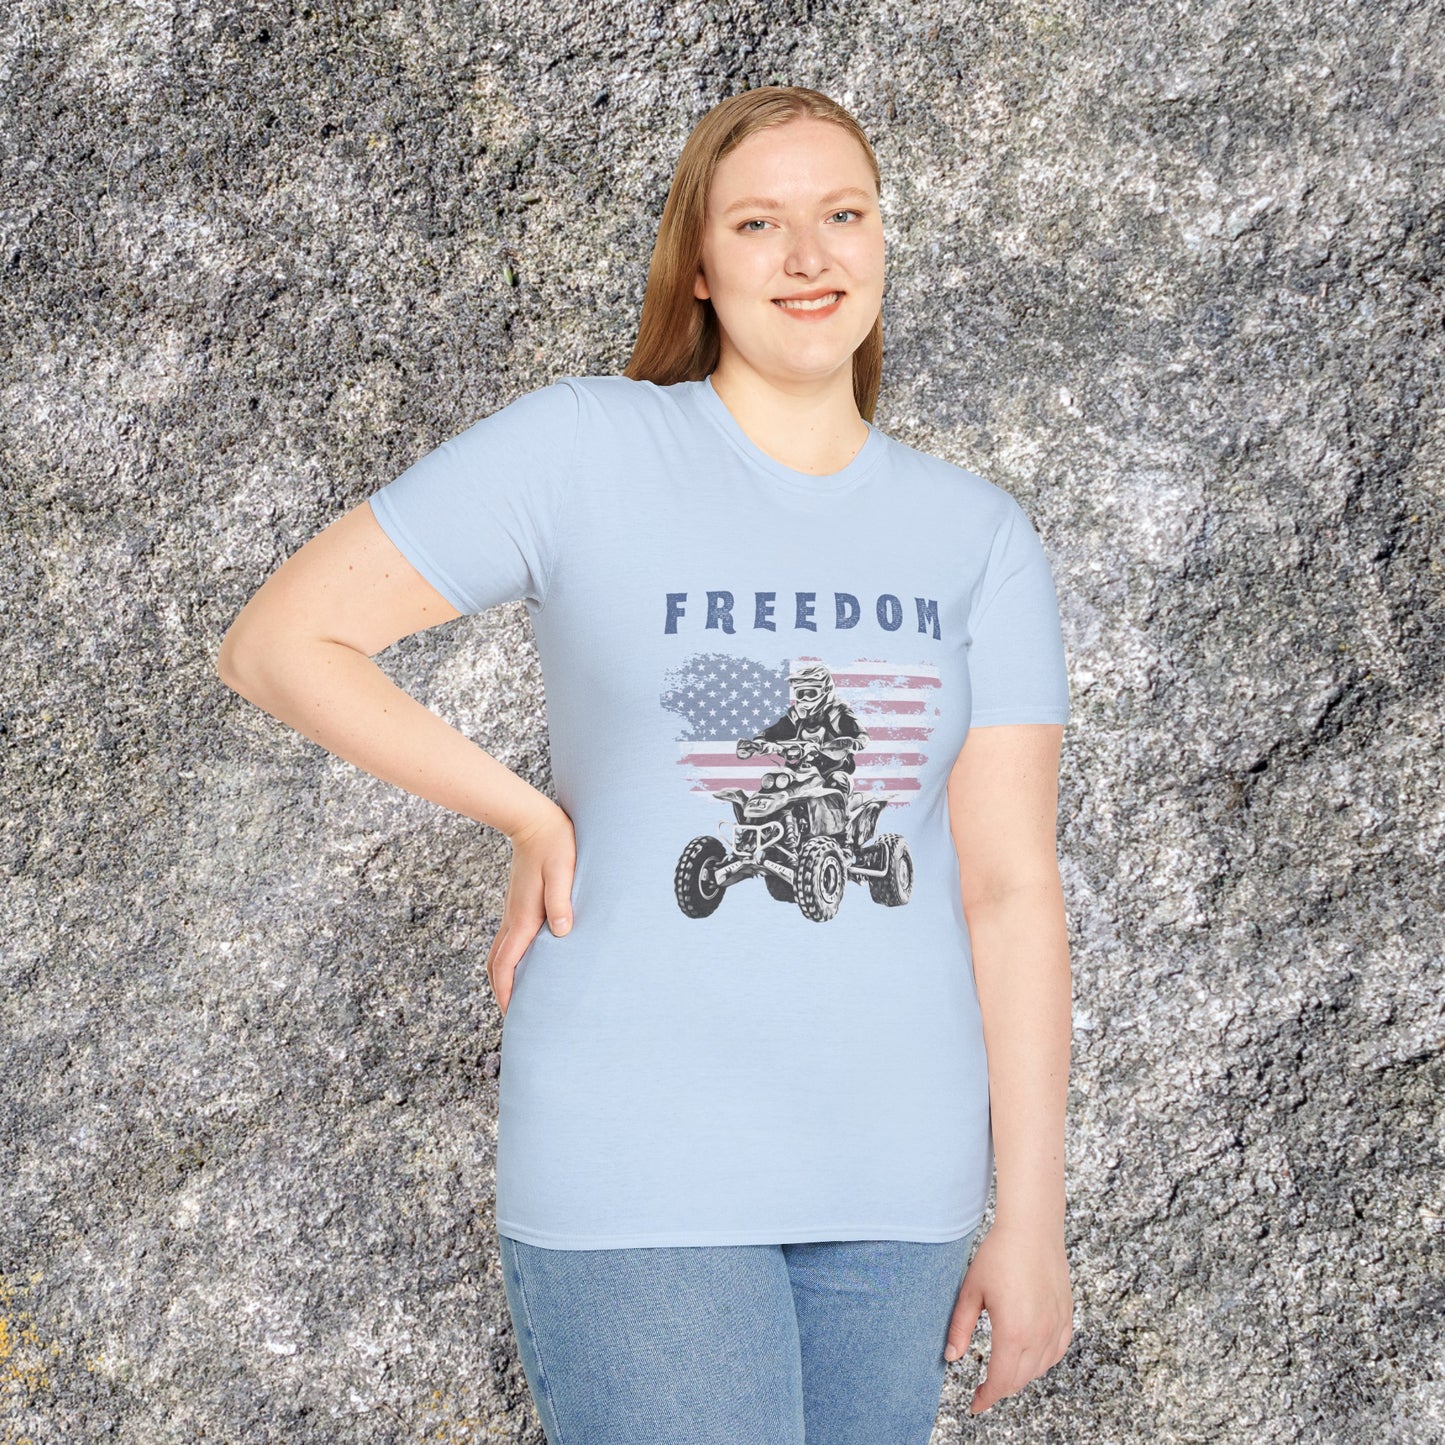 Mens ATV Shirt | Freedom Rider | American flag with man on Honda 400 EX ATV | Patriotic four wheeler riding shirt | SOFT Cotton Adult Unisex tee shirt | Four wheeler shirt for Boys